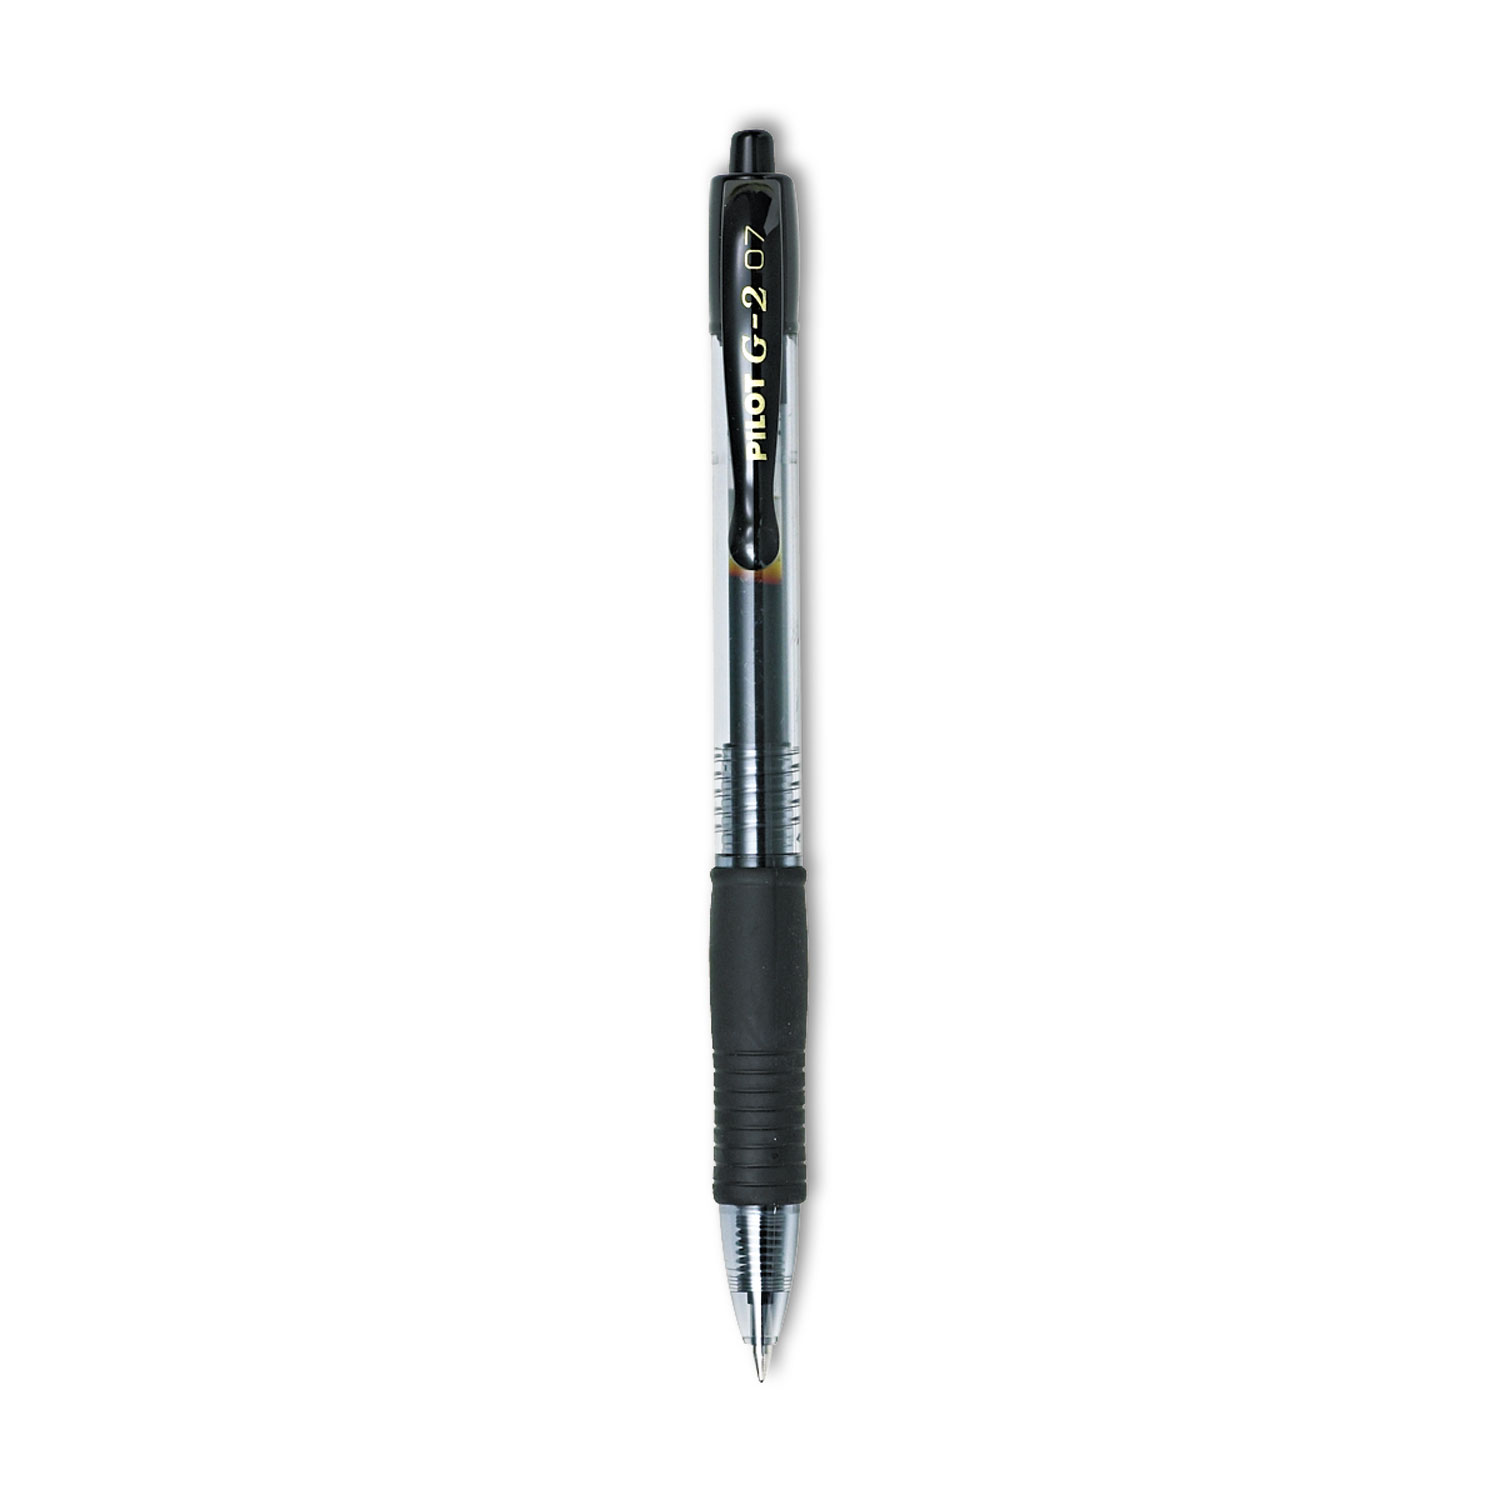 Pilot G2 Gel Pen - 0.7 mm - Black